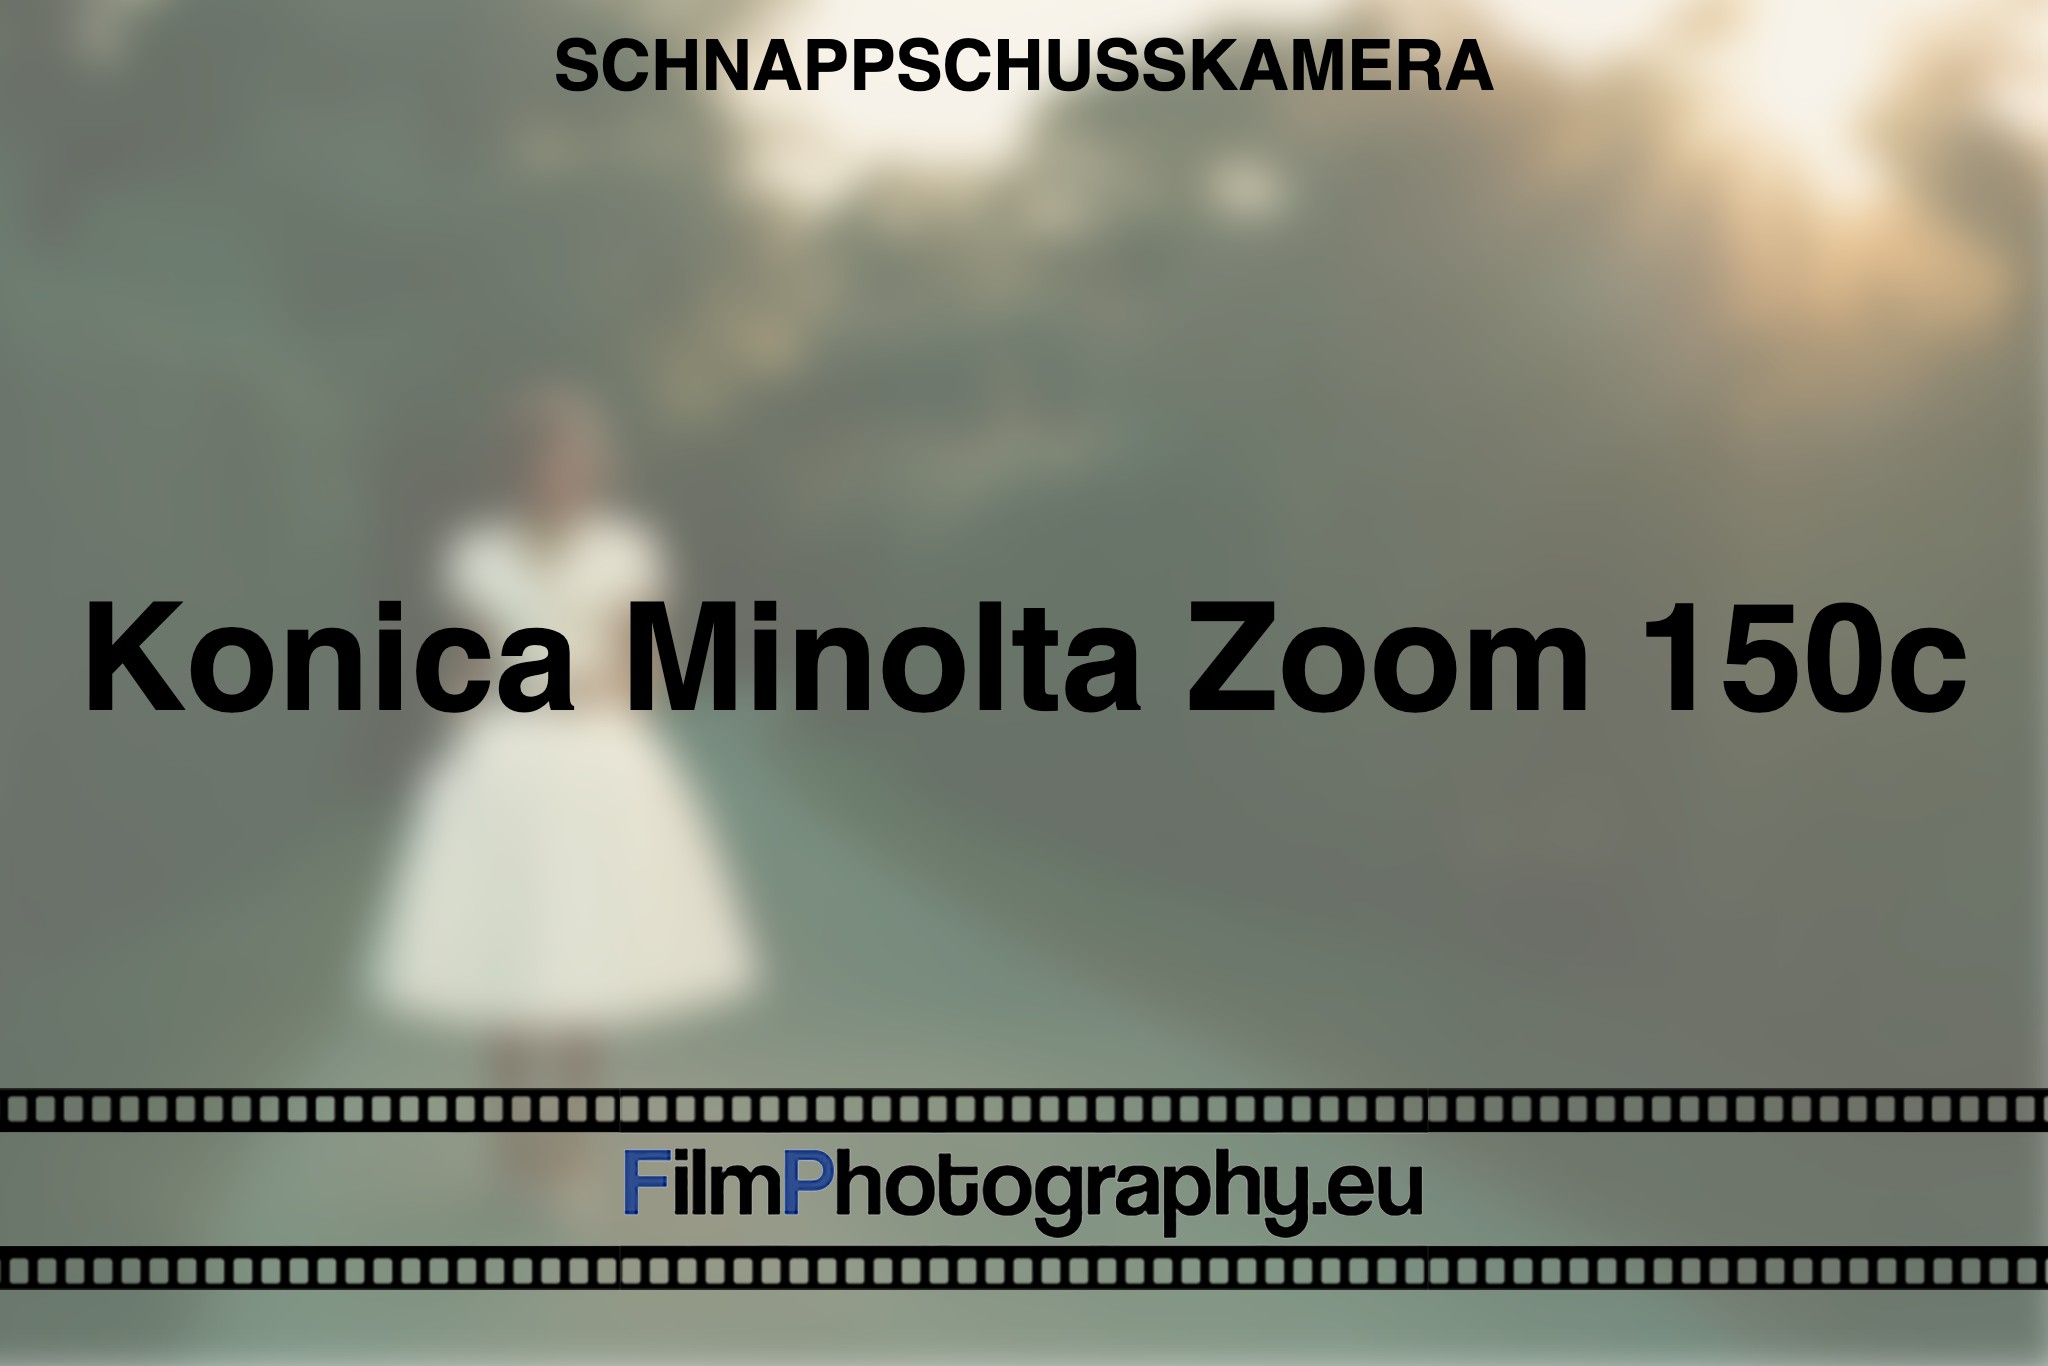 konica-minolta-zoom-150c-schnappschusskamera-bnv